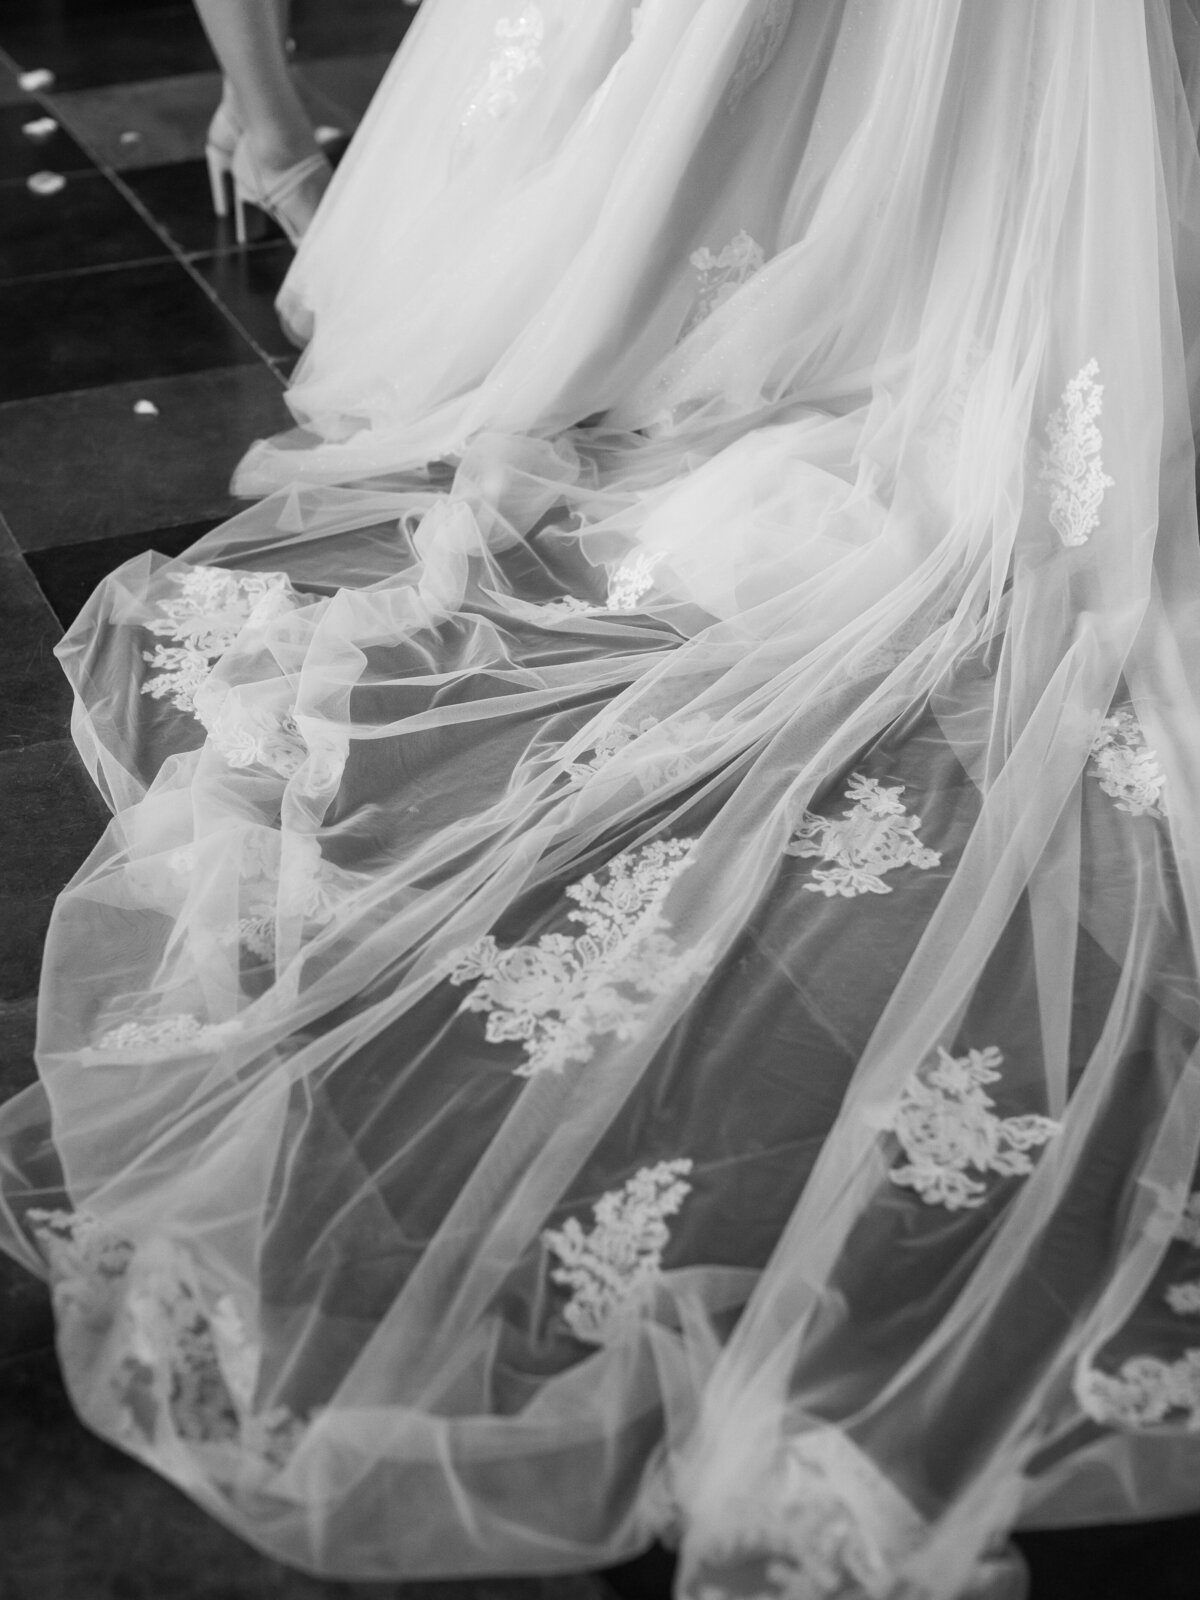 71-10072021-_81A2642-Olivia-Poncelet-Wedding-Photographer-Belgium-Chateau-de-Ruisbroek-Chloe-Pieter-WEB-72